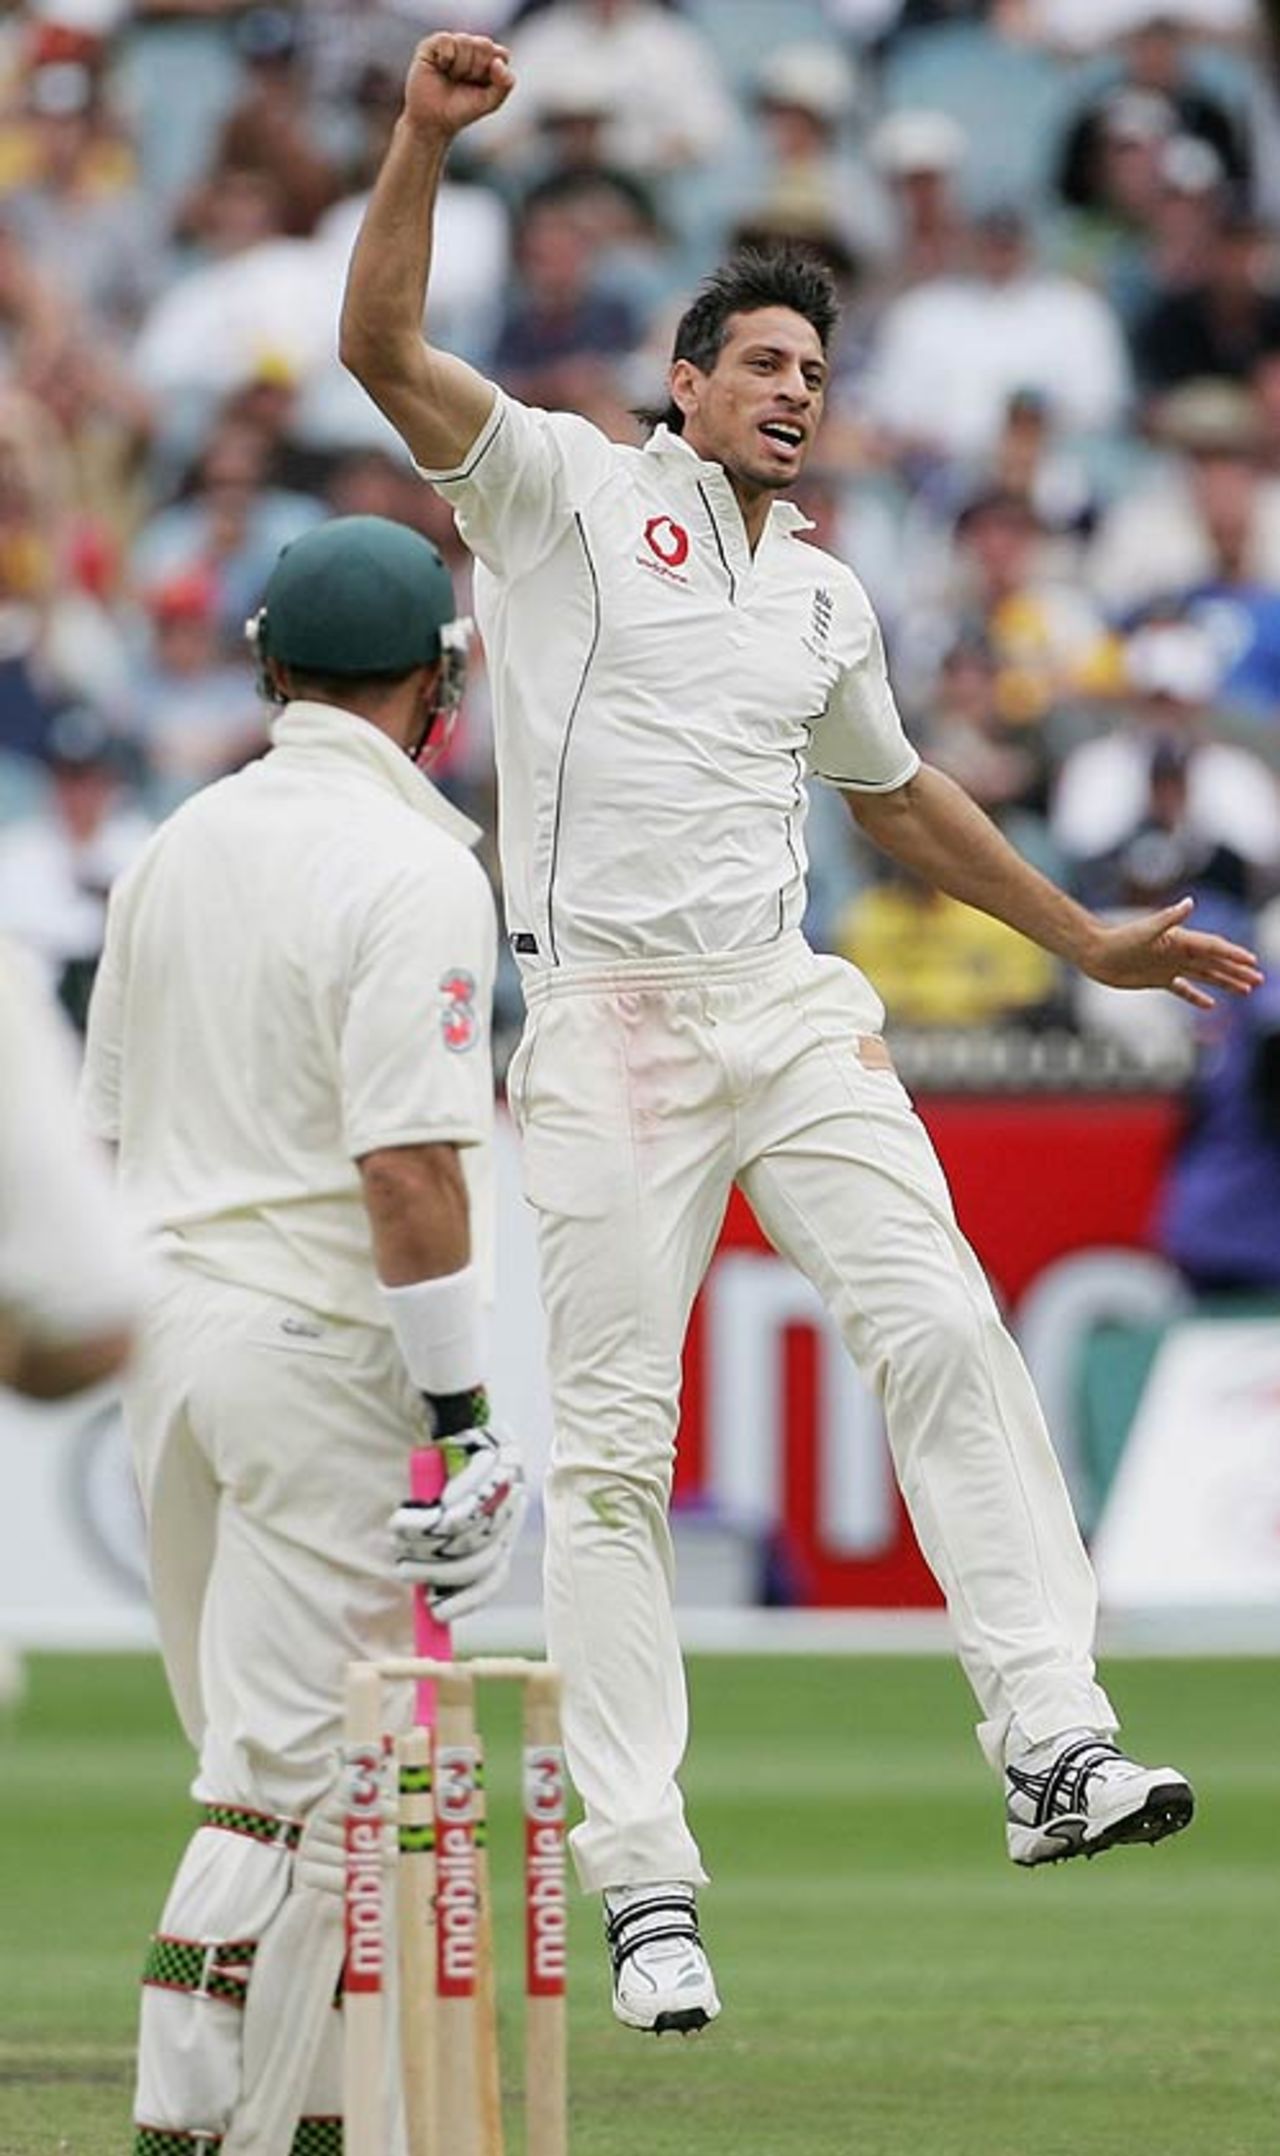 At last: Sajid Mahmood breaks a 279-run partnership by having Matthew Hayden caught behind, Australia v England, 4th Test, Melbourne, December 27, 2006